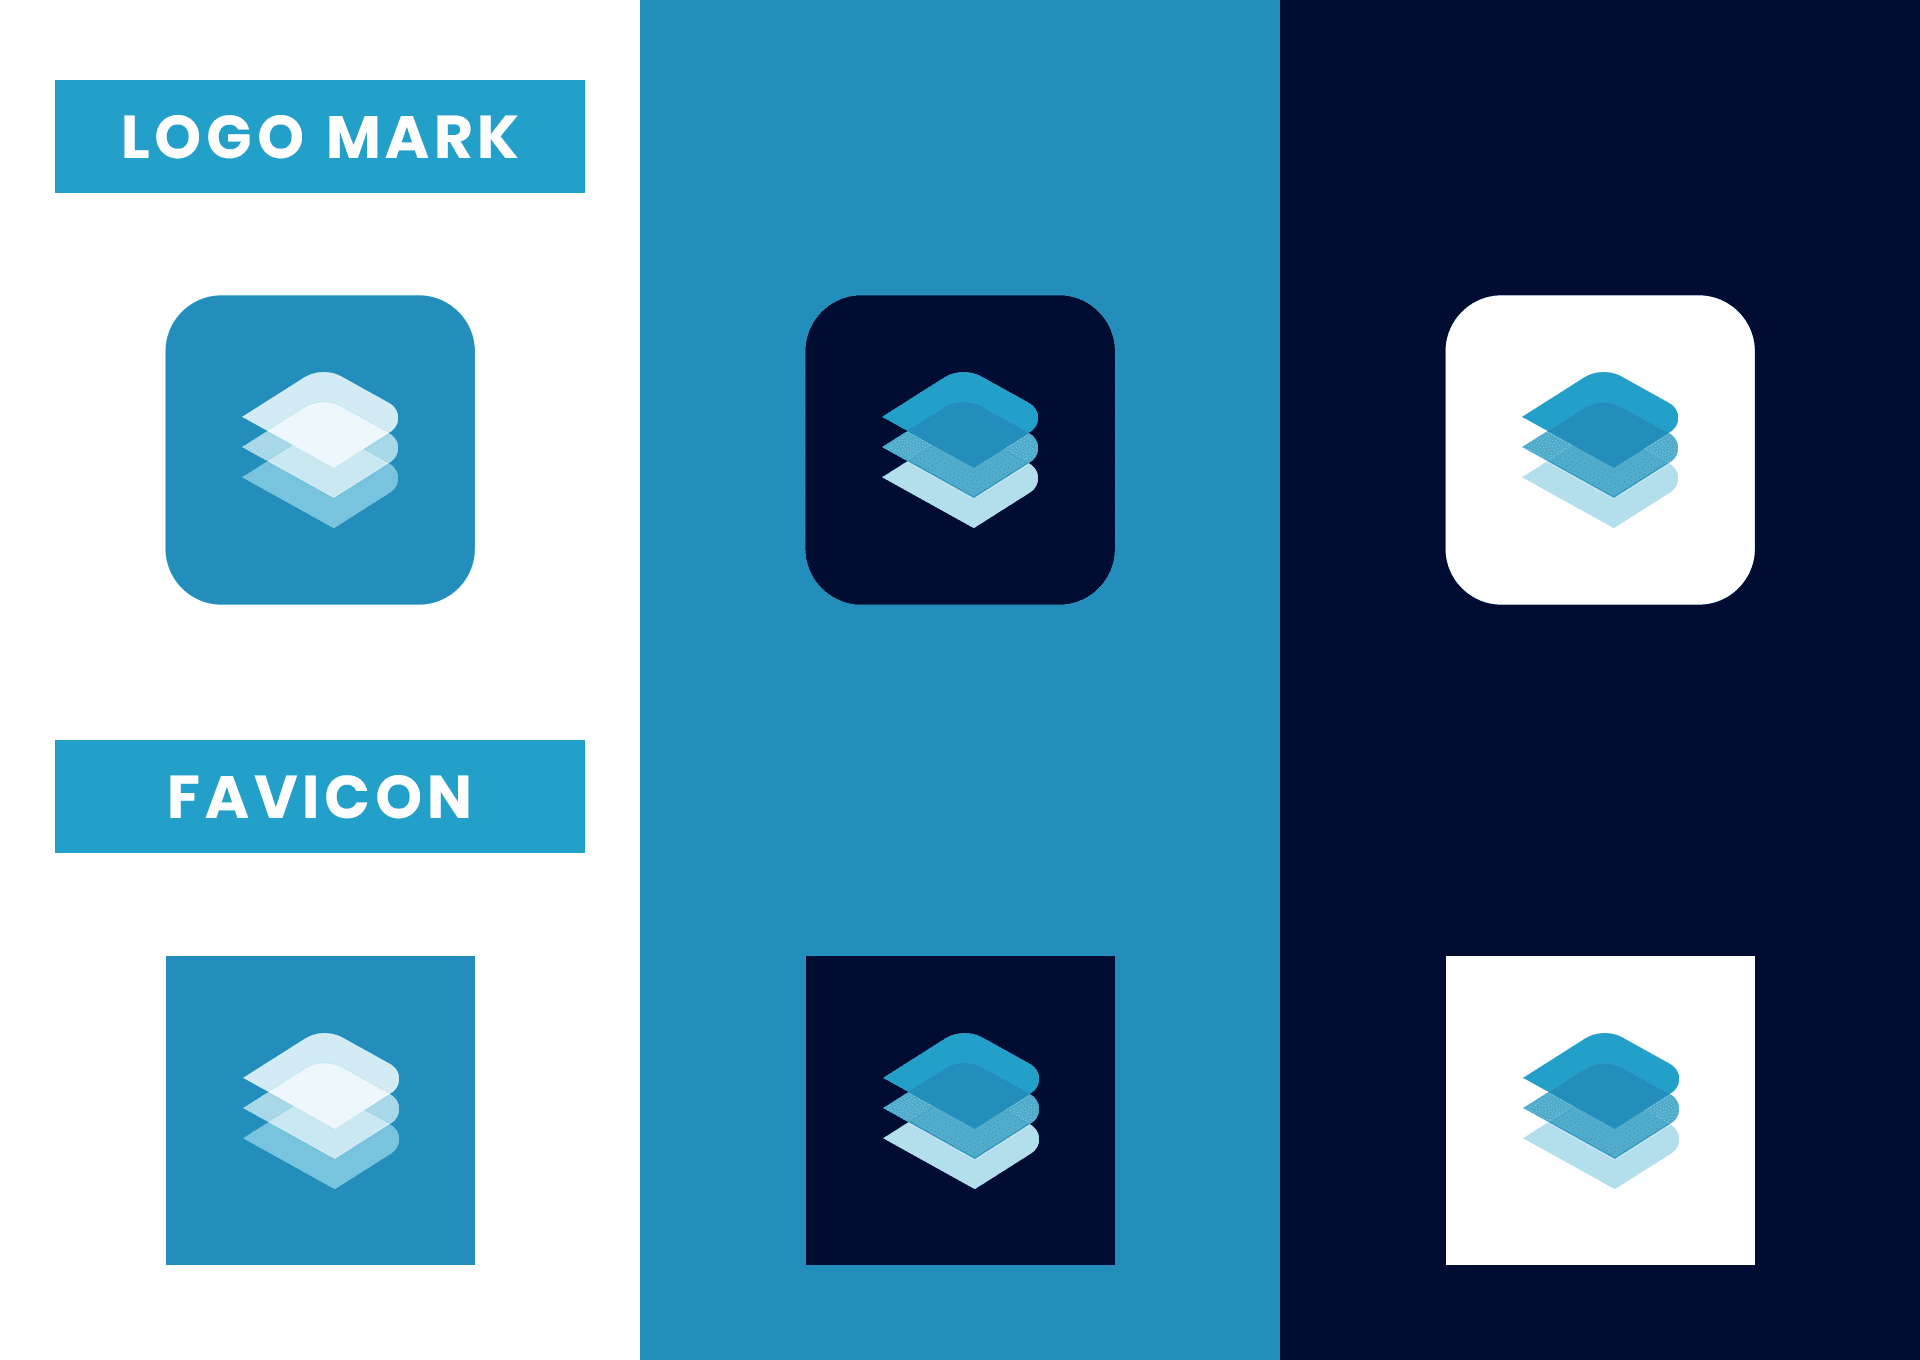 02 - Logo Mark & Favicon (1)